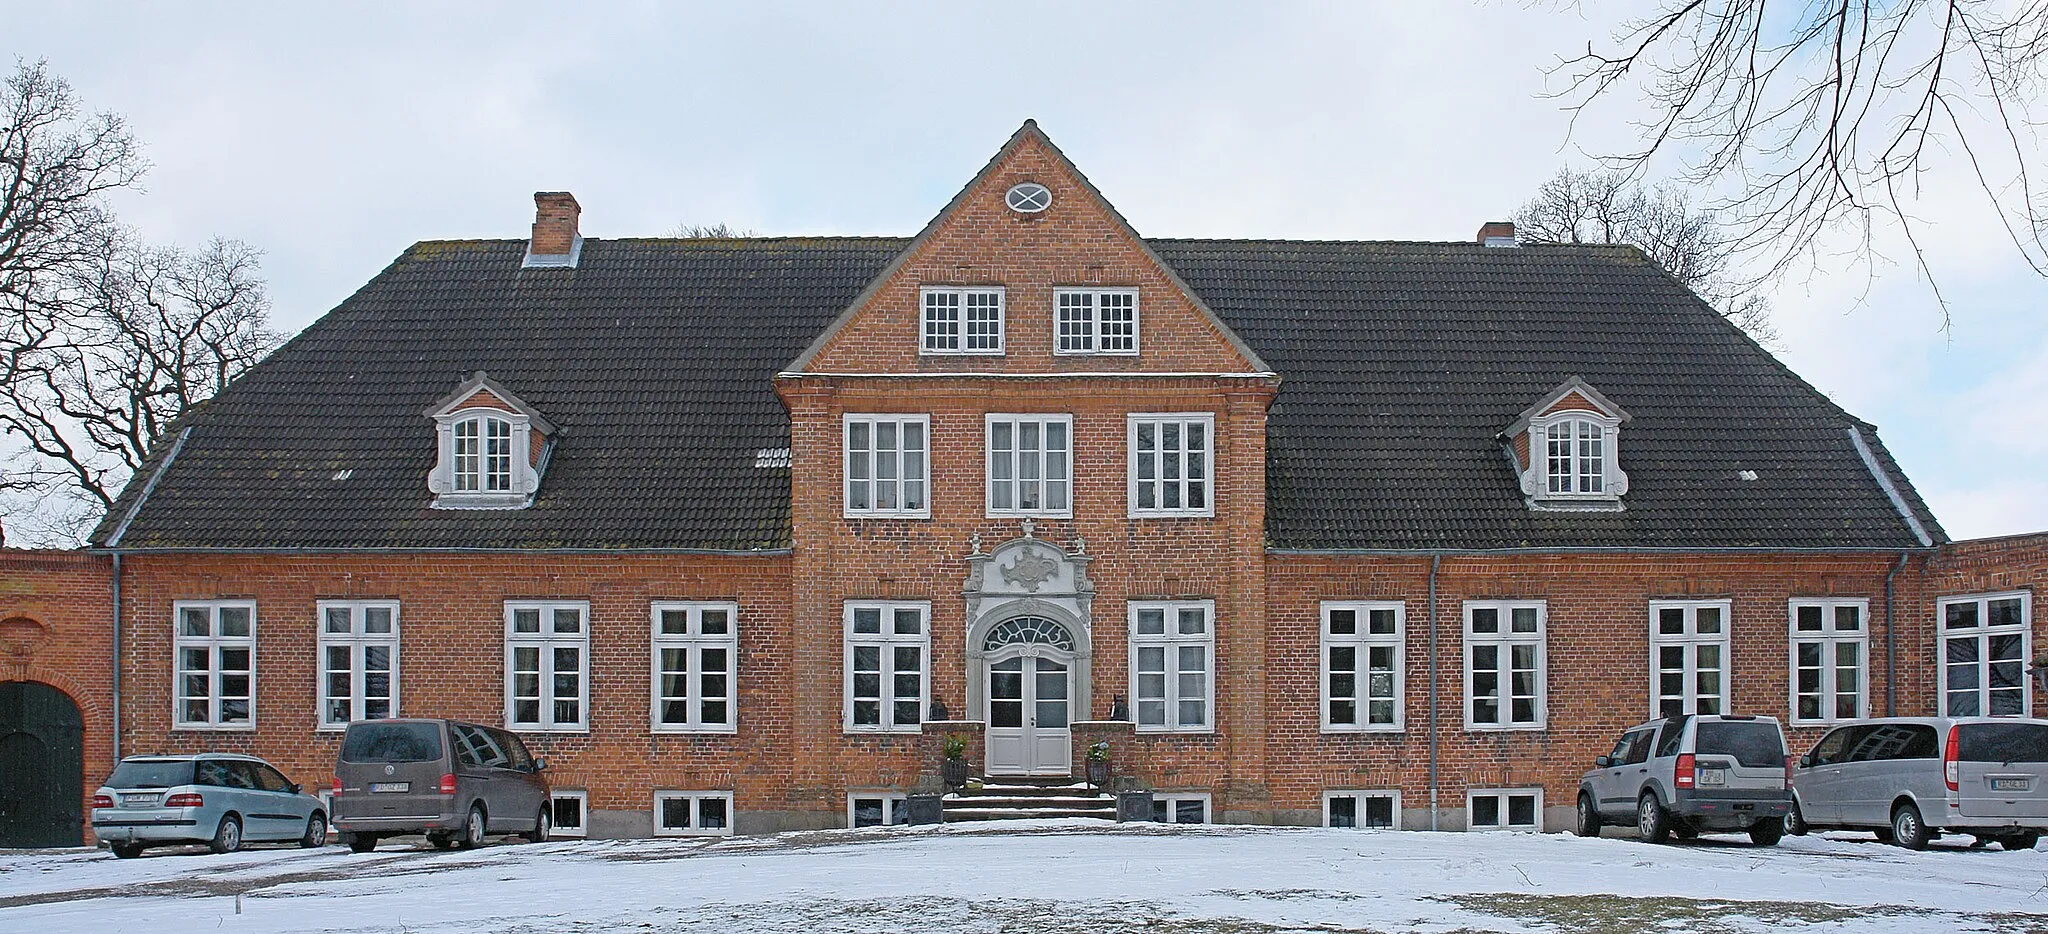 Image of Dänischenhagen